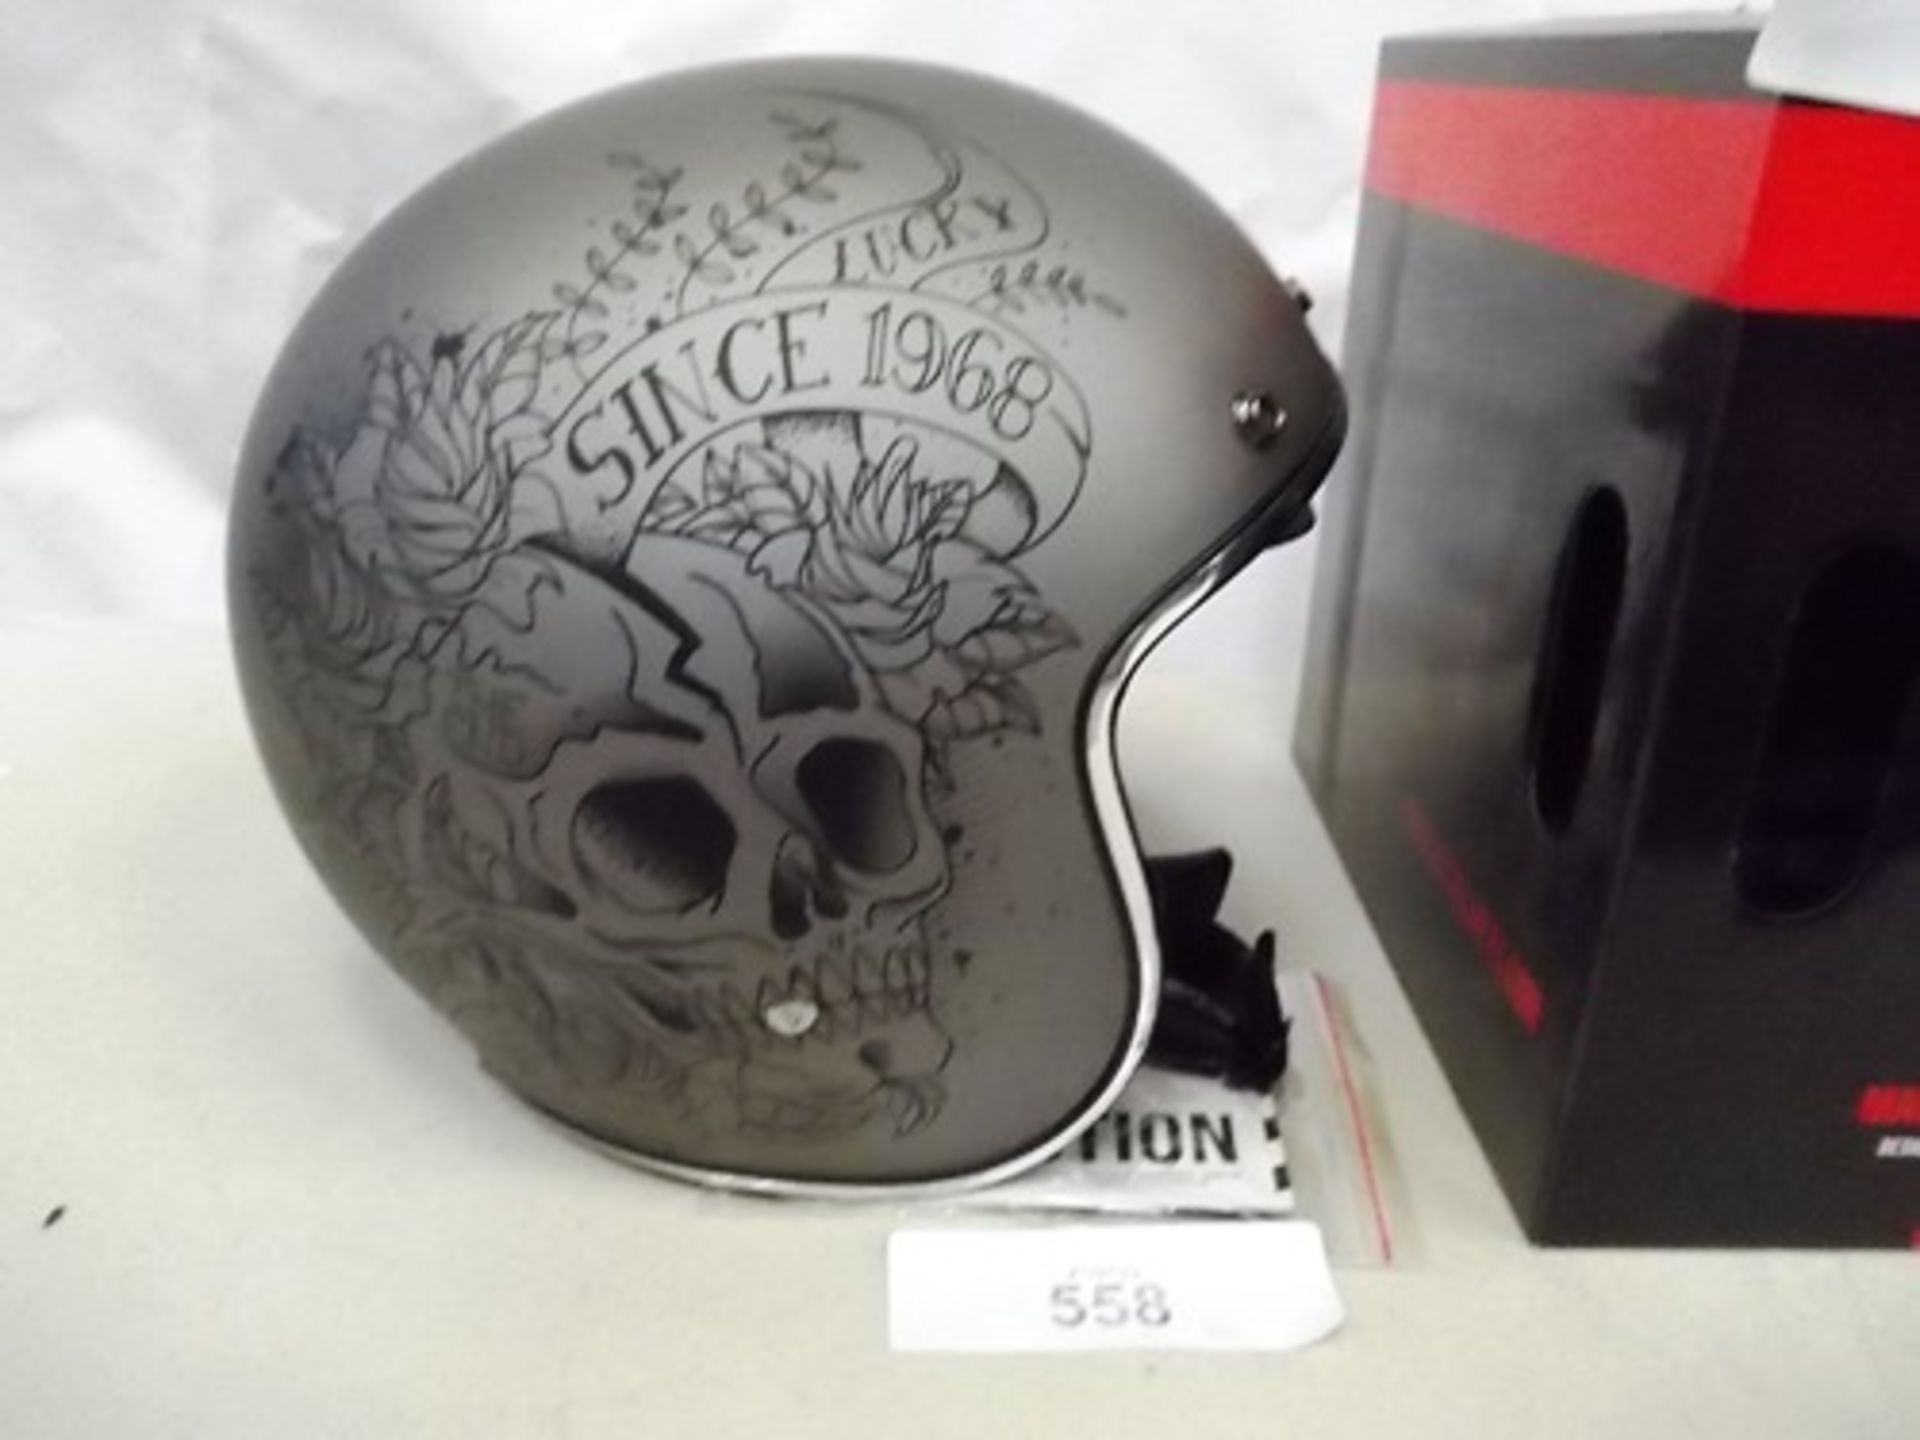 1 x MT Helmets Le Mans 2 SV motorbike helmet, version Skull & Roses AT matte grey, size M - New in - Image 2 of 2